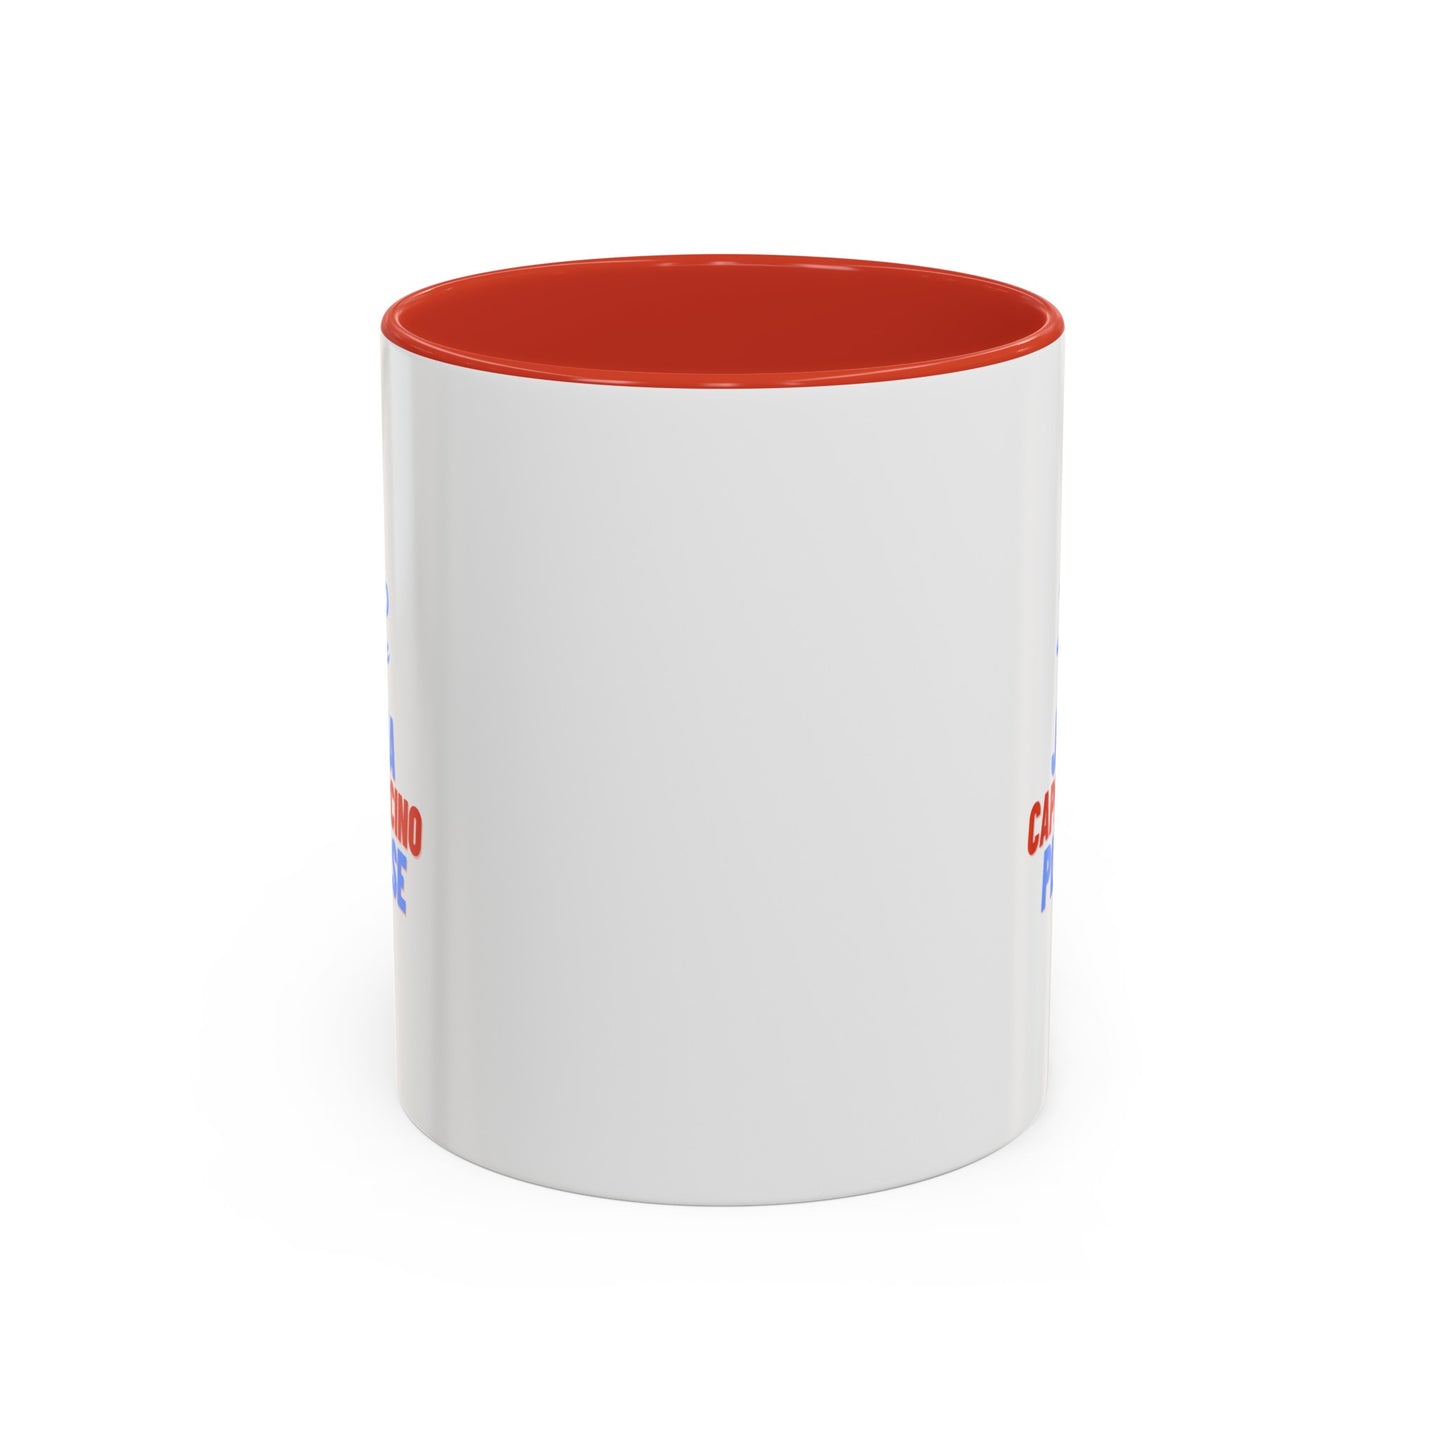 Geek - Programmer mug, JAVA Cappuccino mug, two toned mug